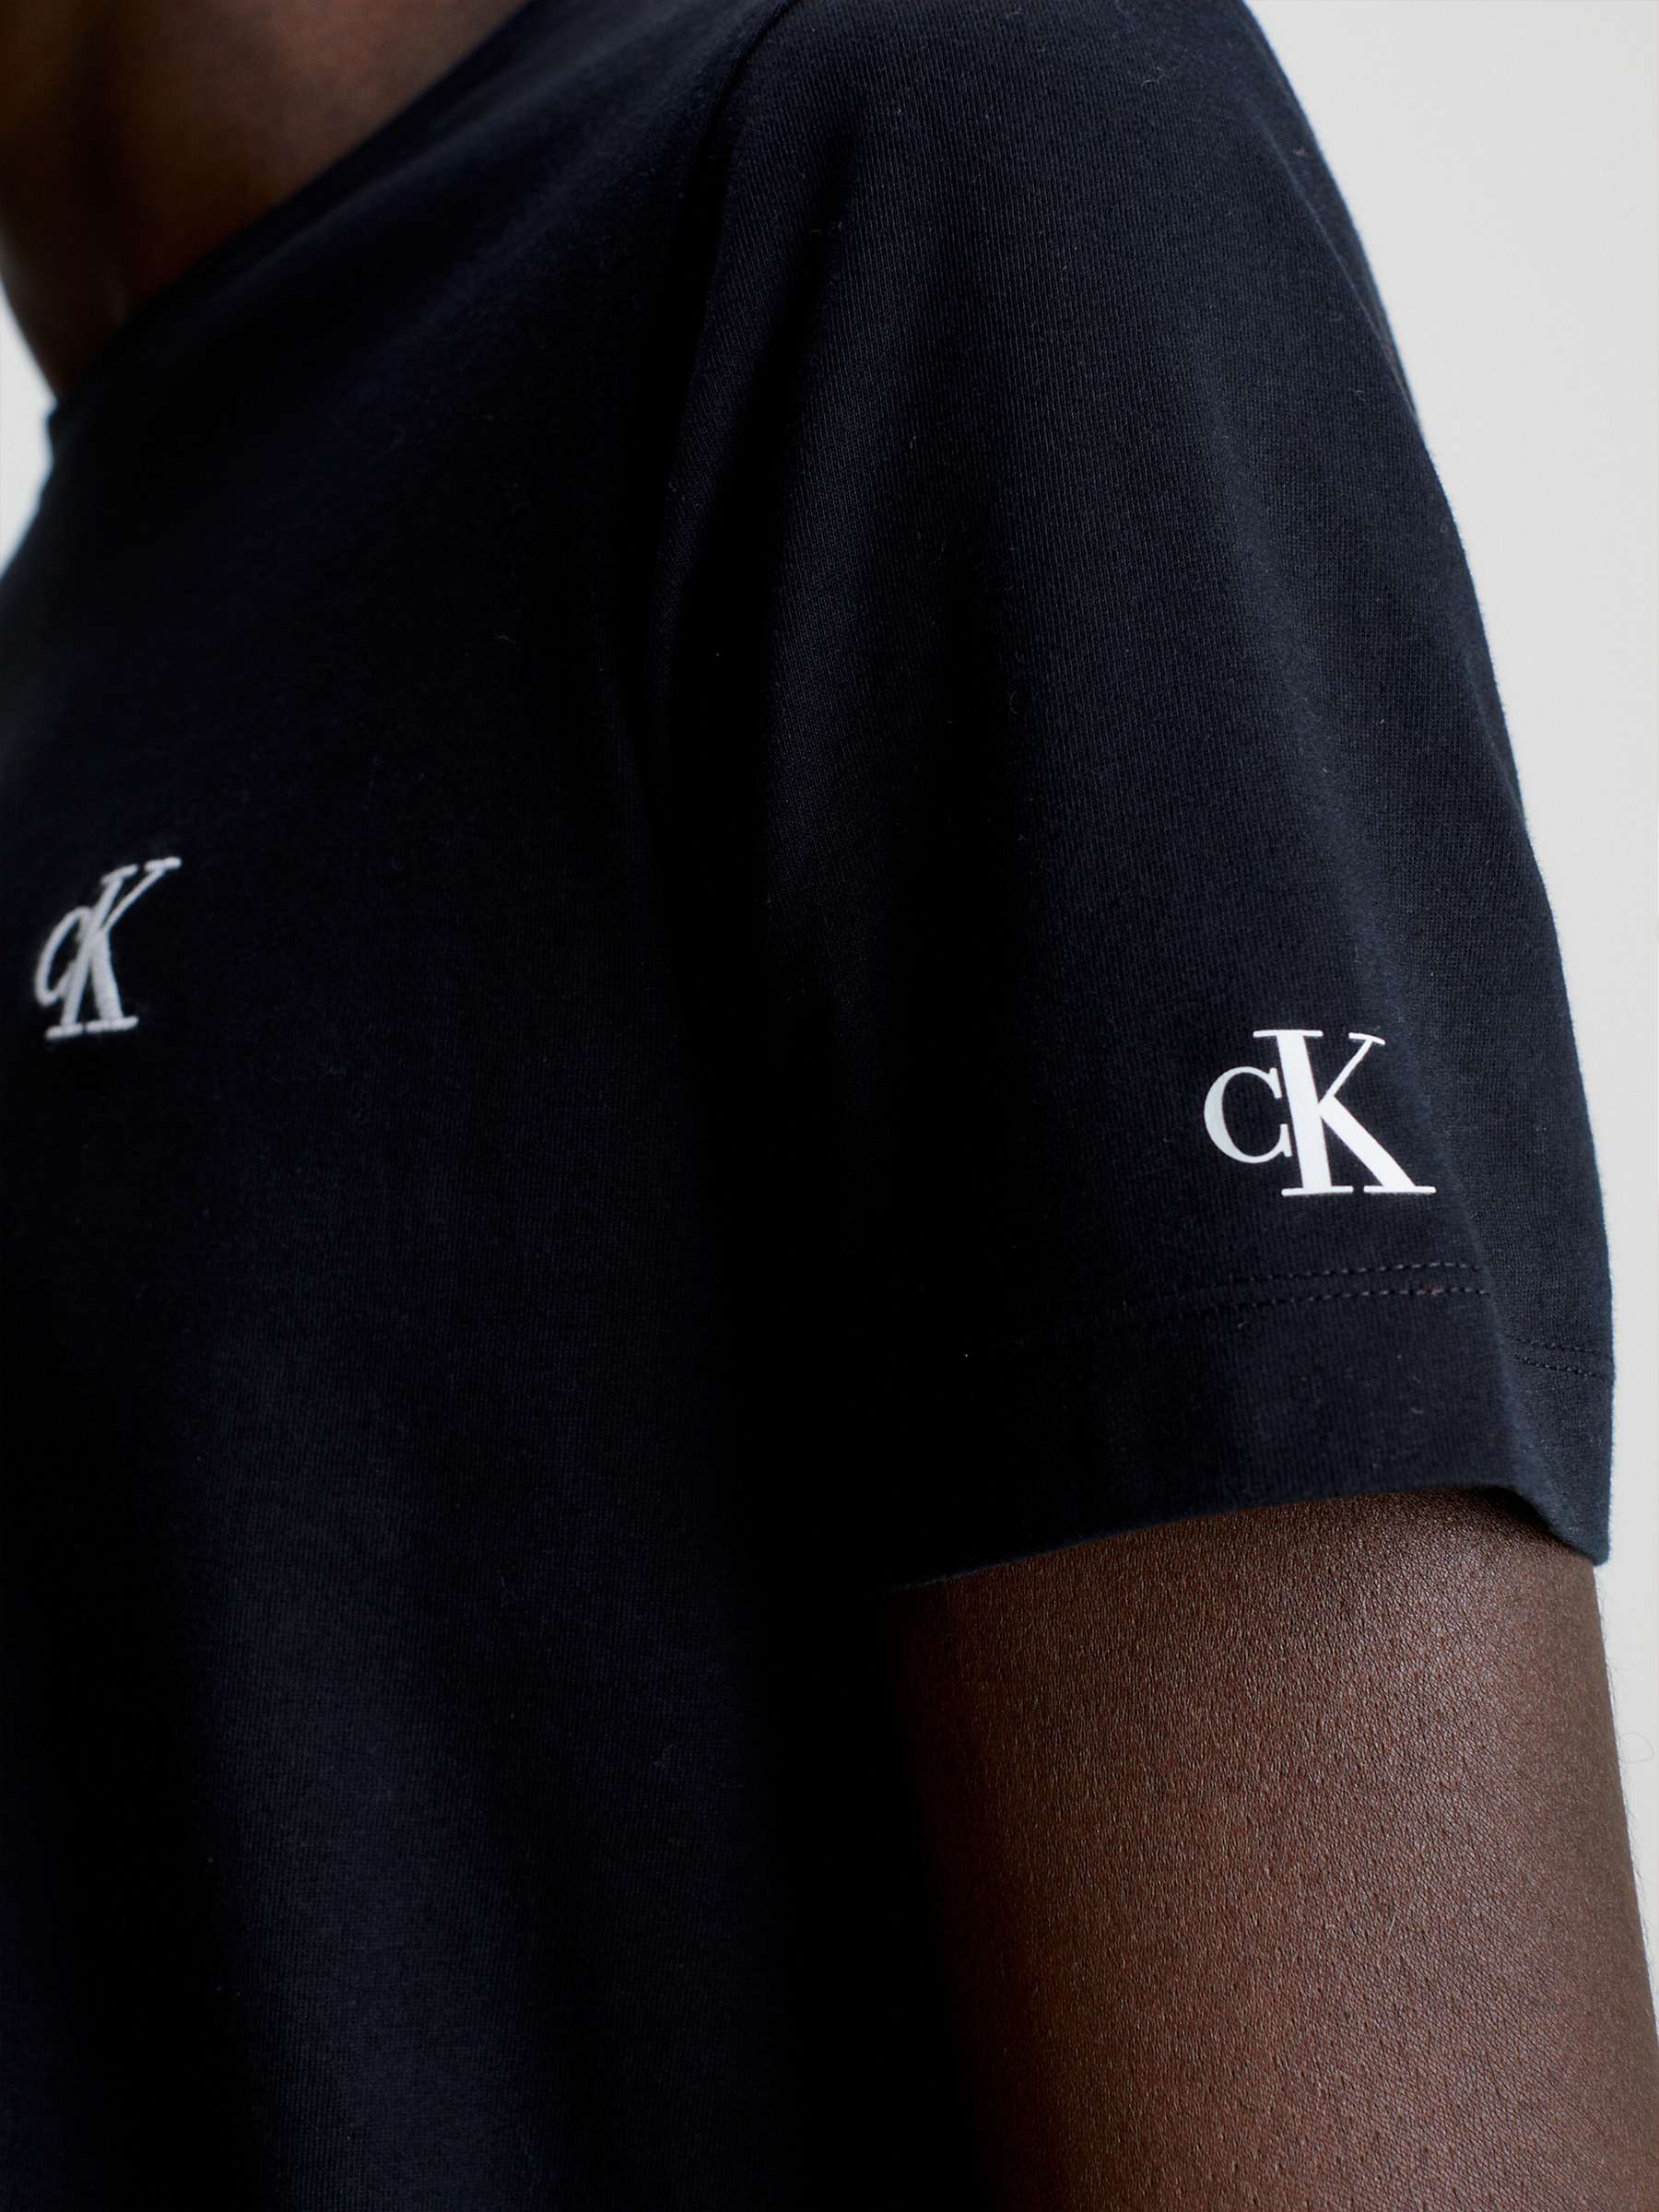 Buy Calvin Klein Jeans Monogram Slim Fit T-Shirt, Ck Black Online at johnlewis.com